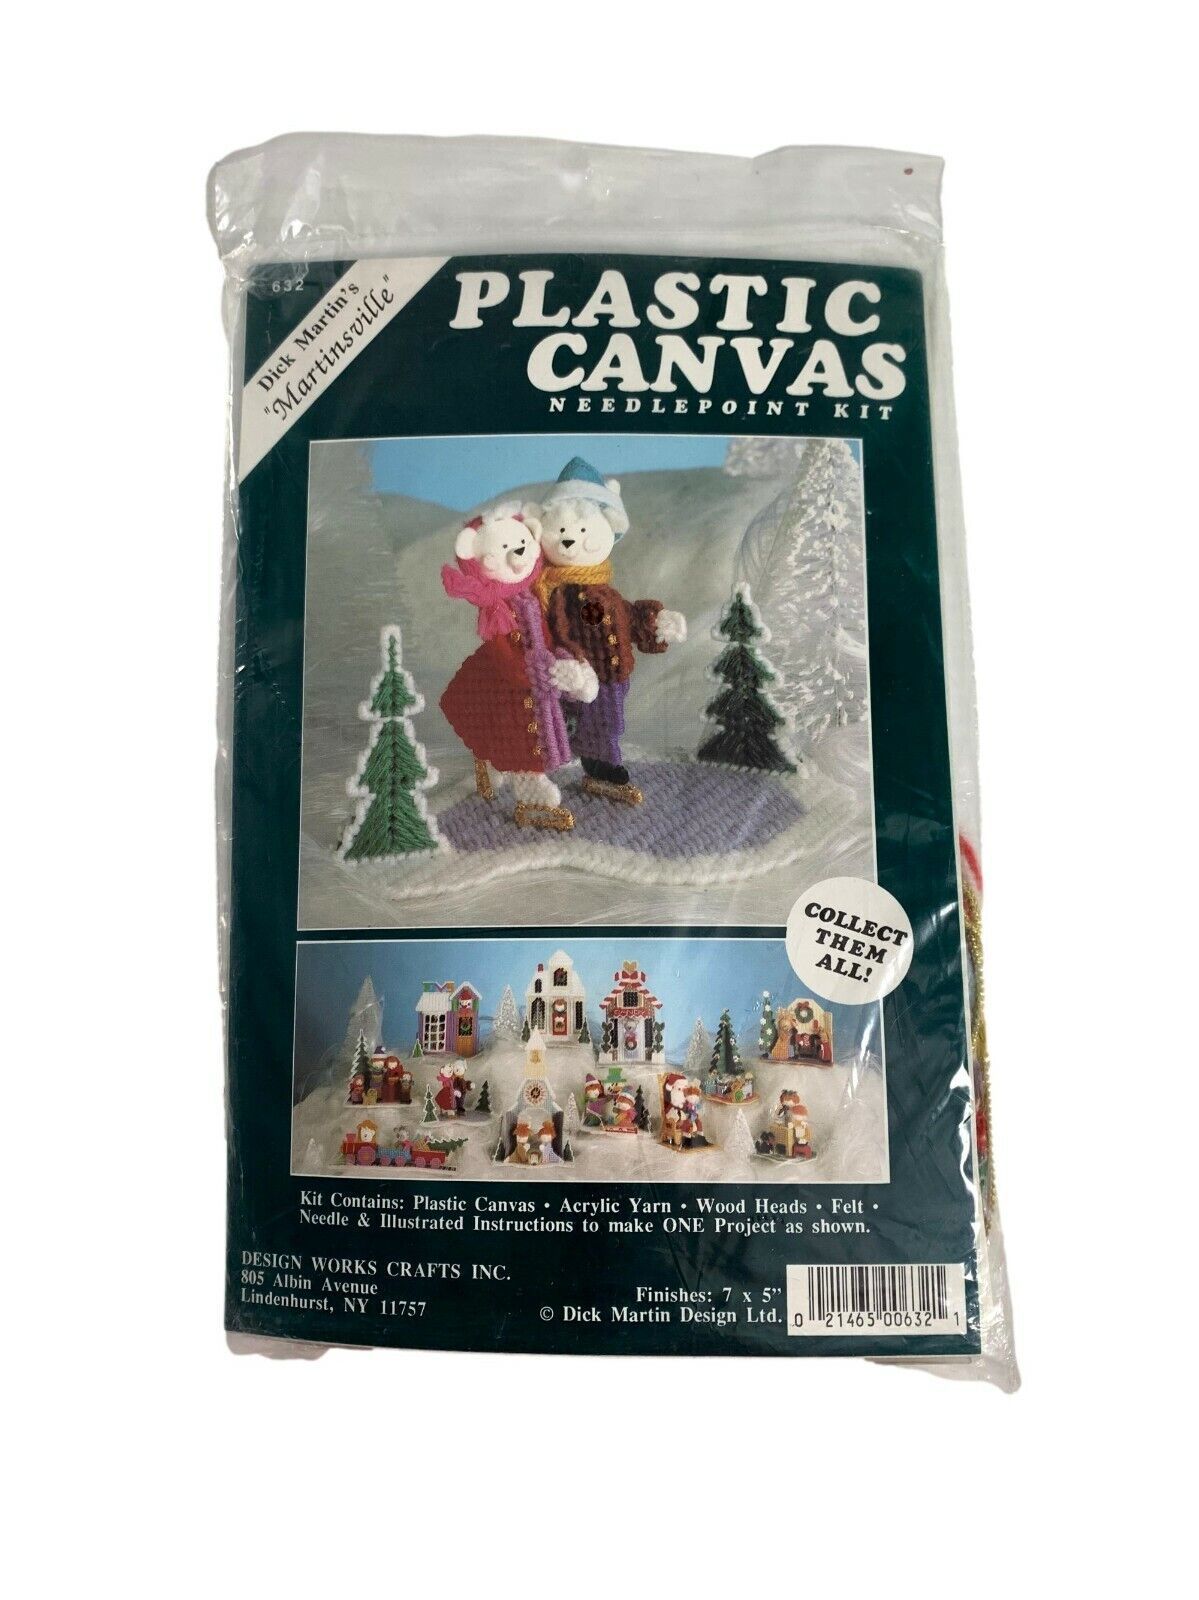 Design Works Crafts Dick Martins Martinsville Plastic Canvas Needlepoint Kit 632 - $11.88